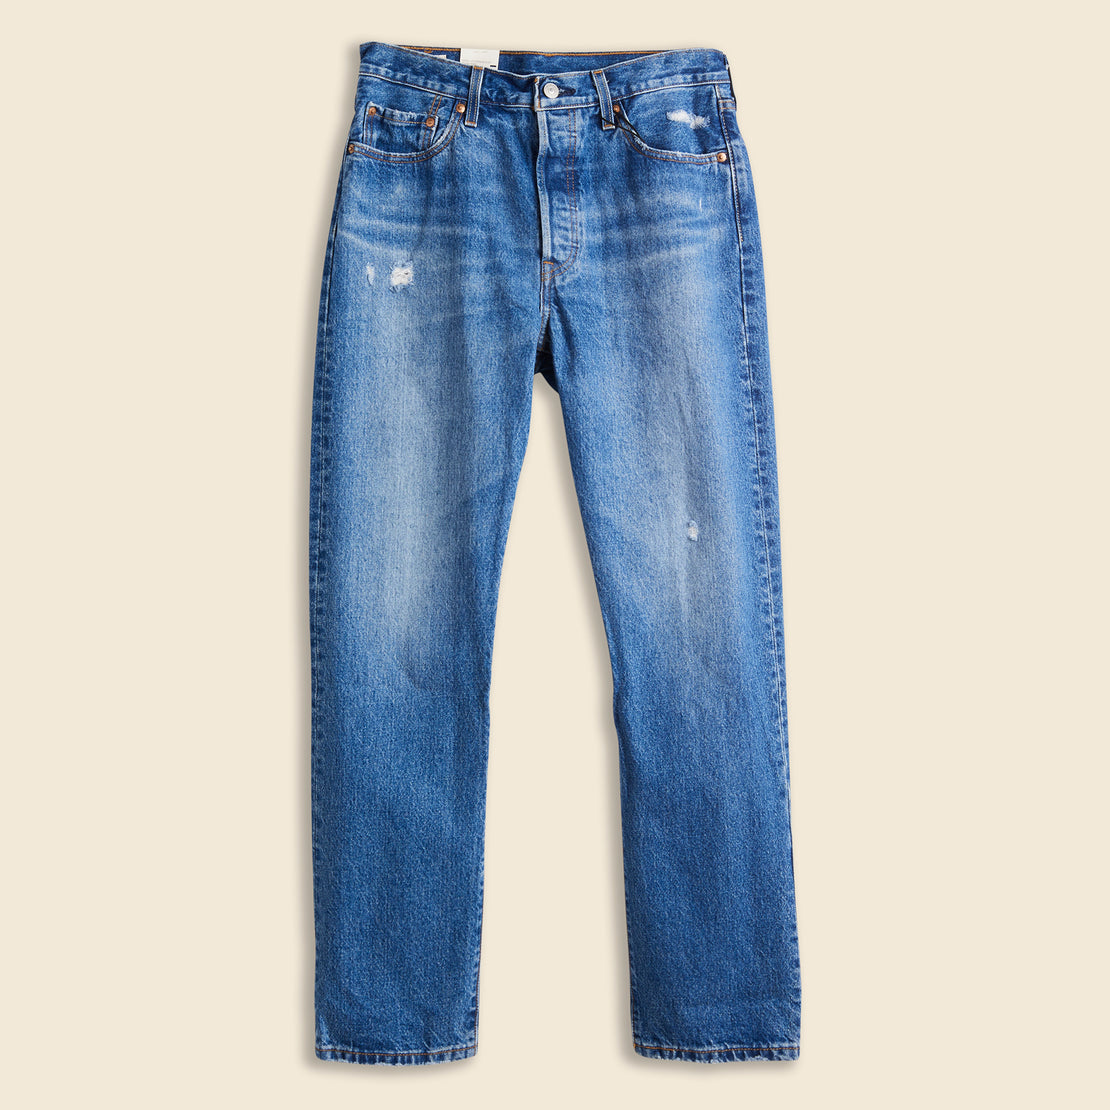 Levis Premium 501 Jeans - Oxnard Athens Dark